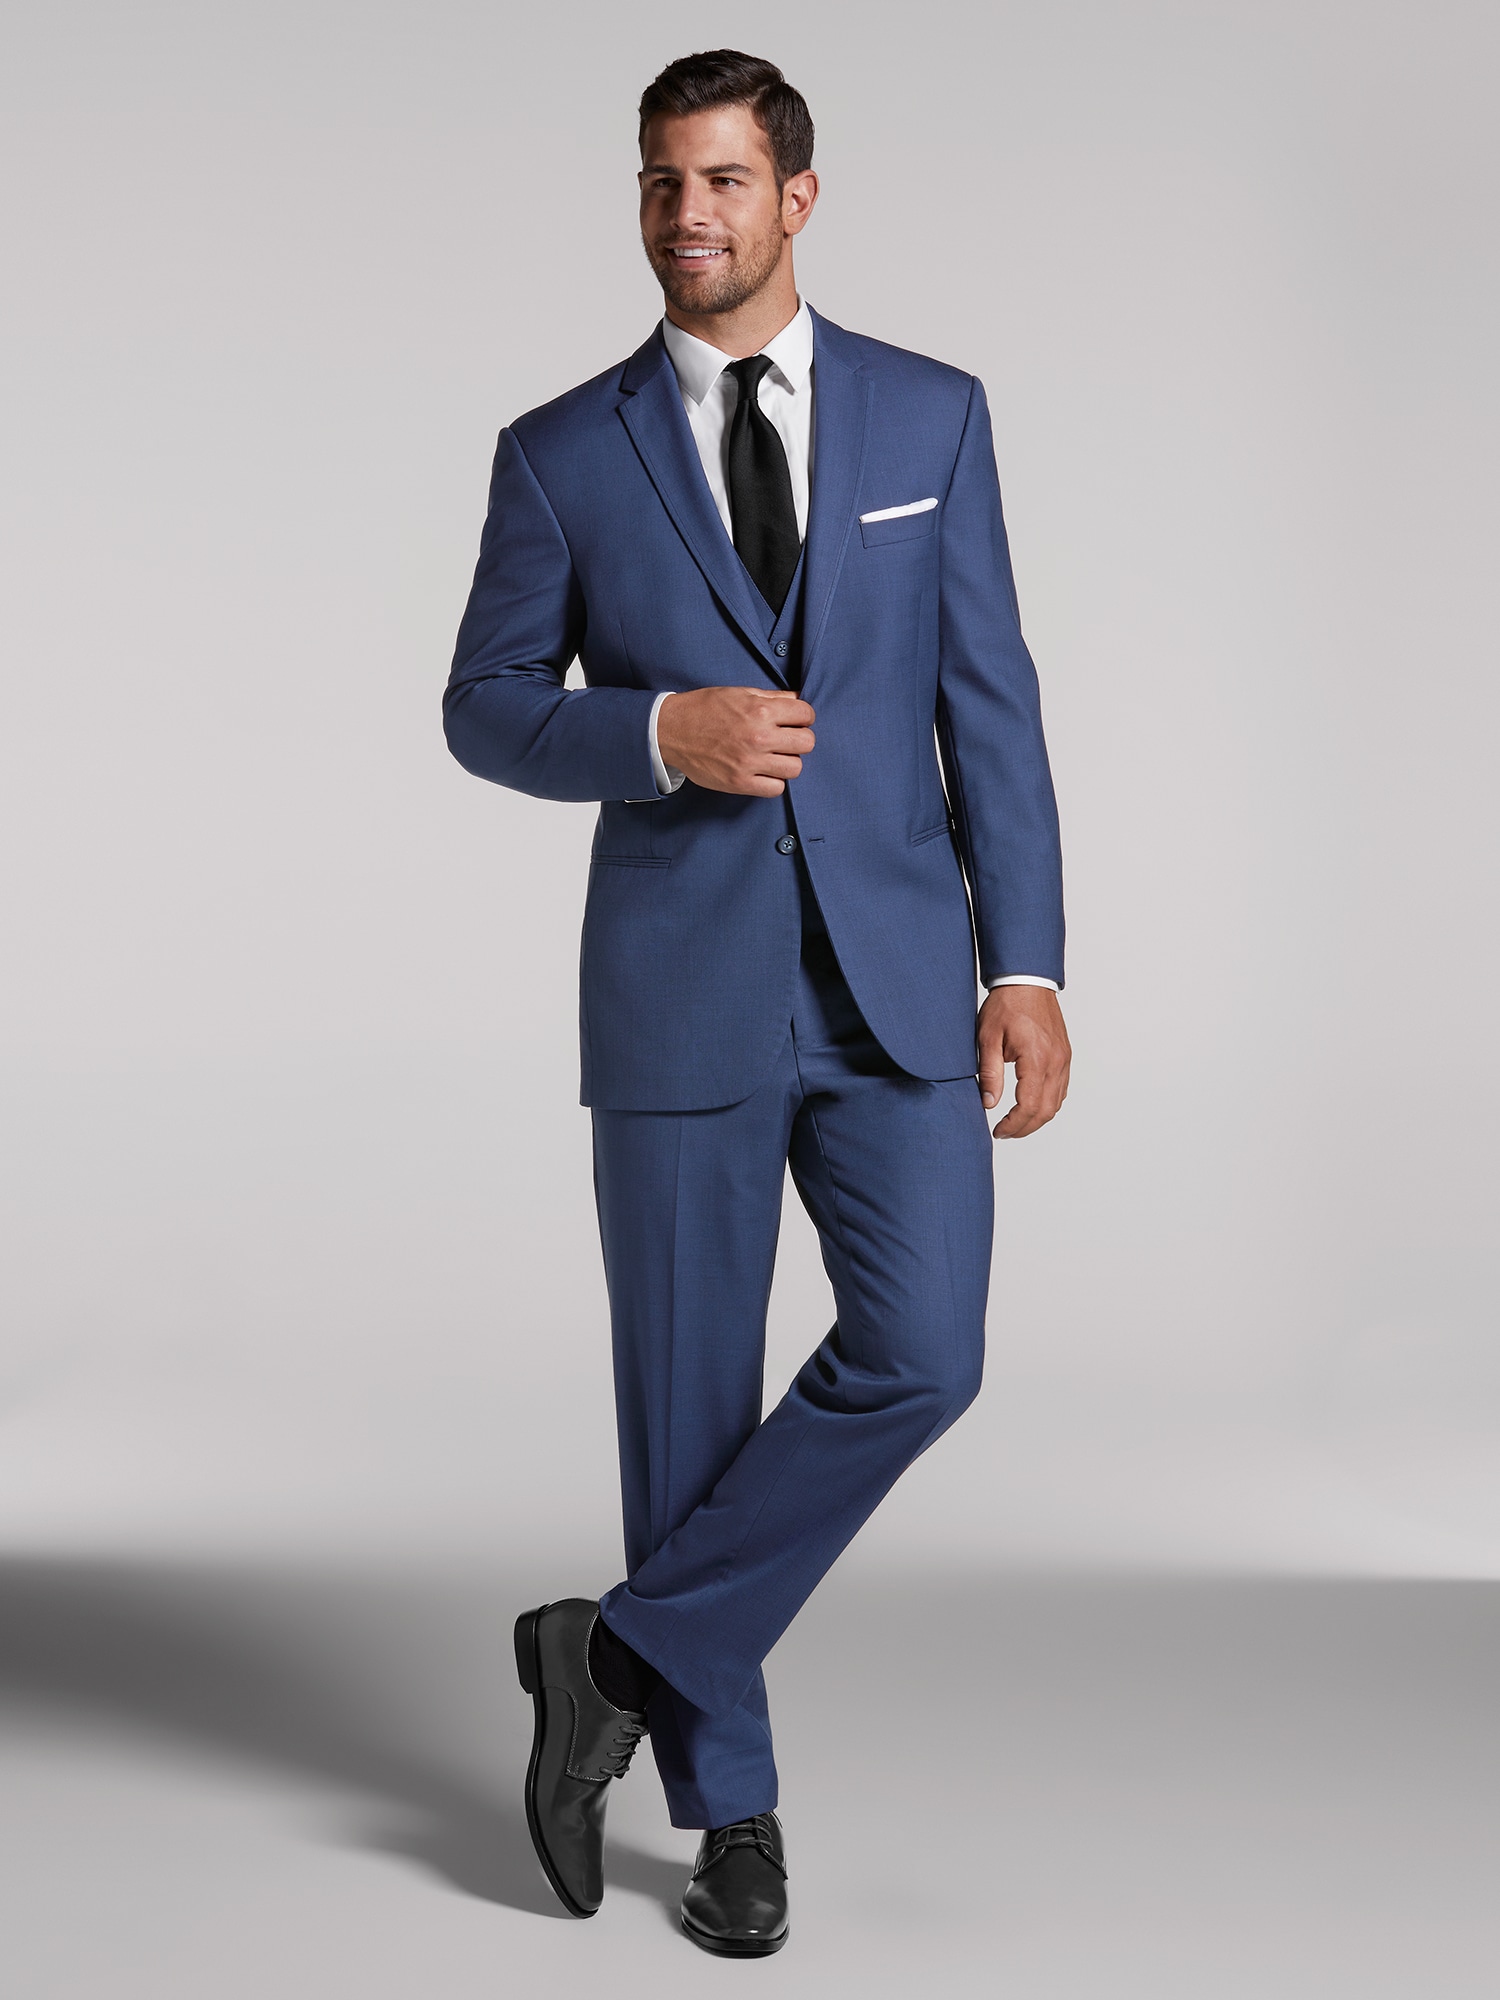 Men's Royal Blue 3 Piece Fashion Formal Suit Slim Fit One Button Prom  Dinner Wear Suit -  Canada